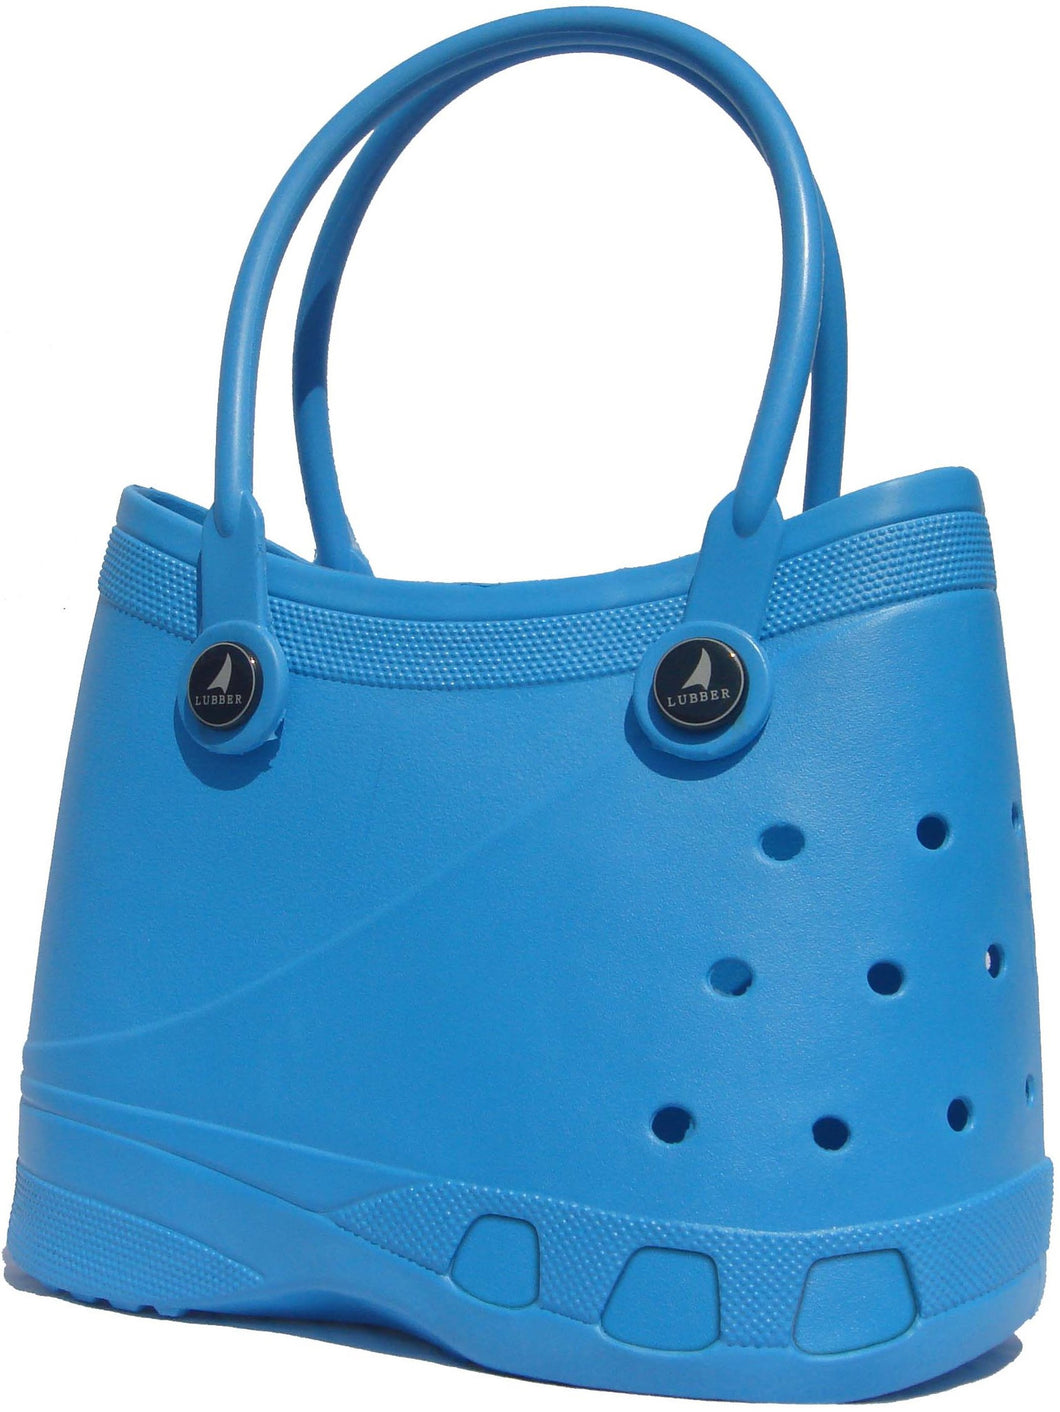 LUBBER Tote Rubber Croc Waterproof Beach Bag (Blue)